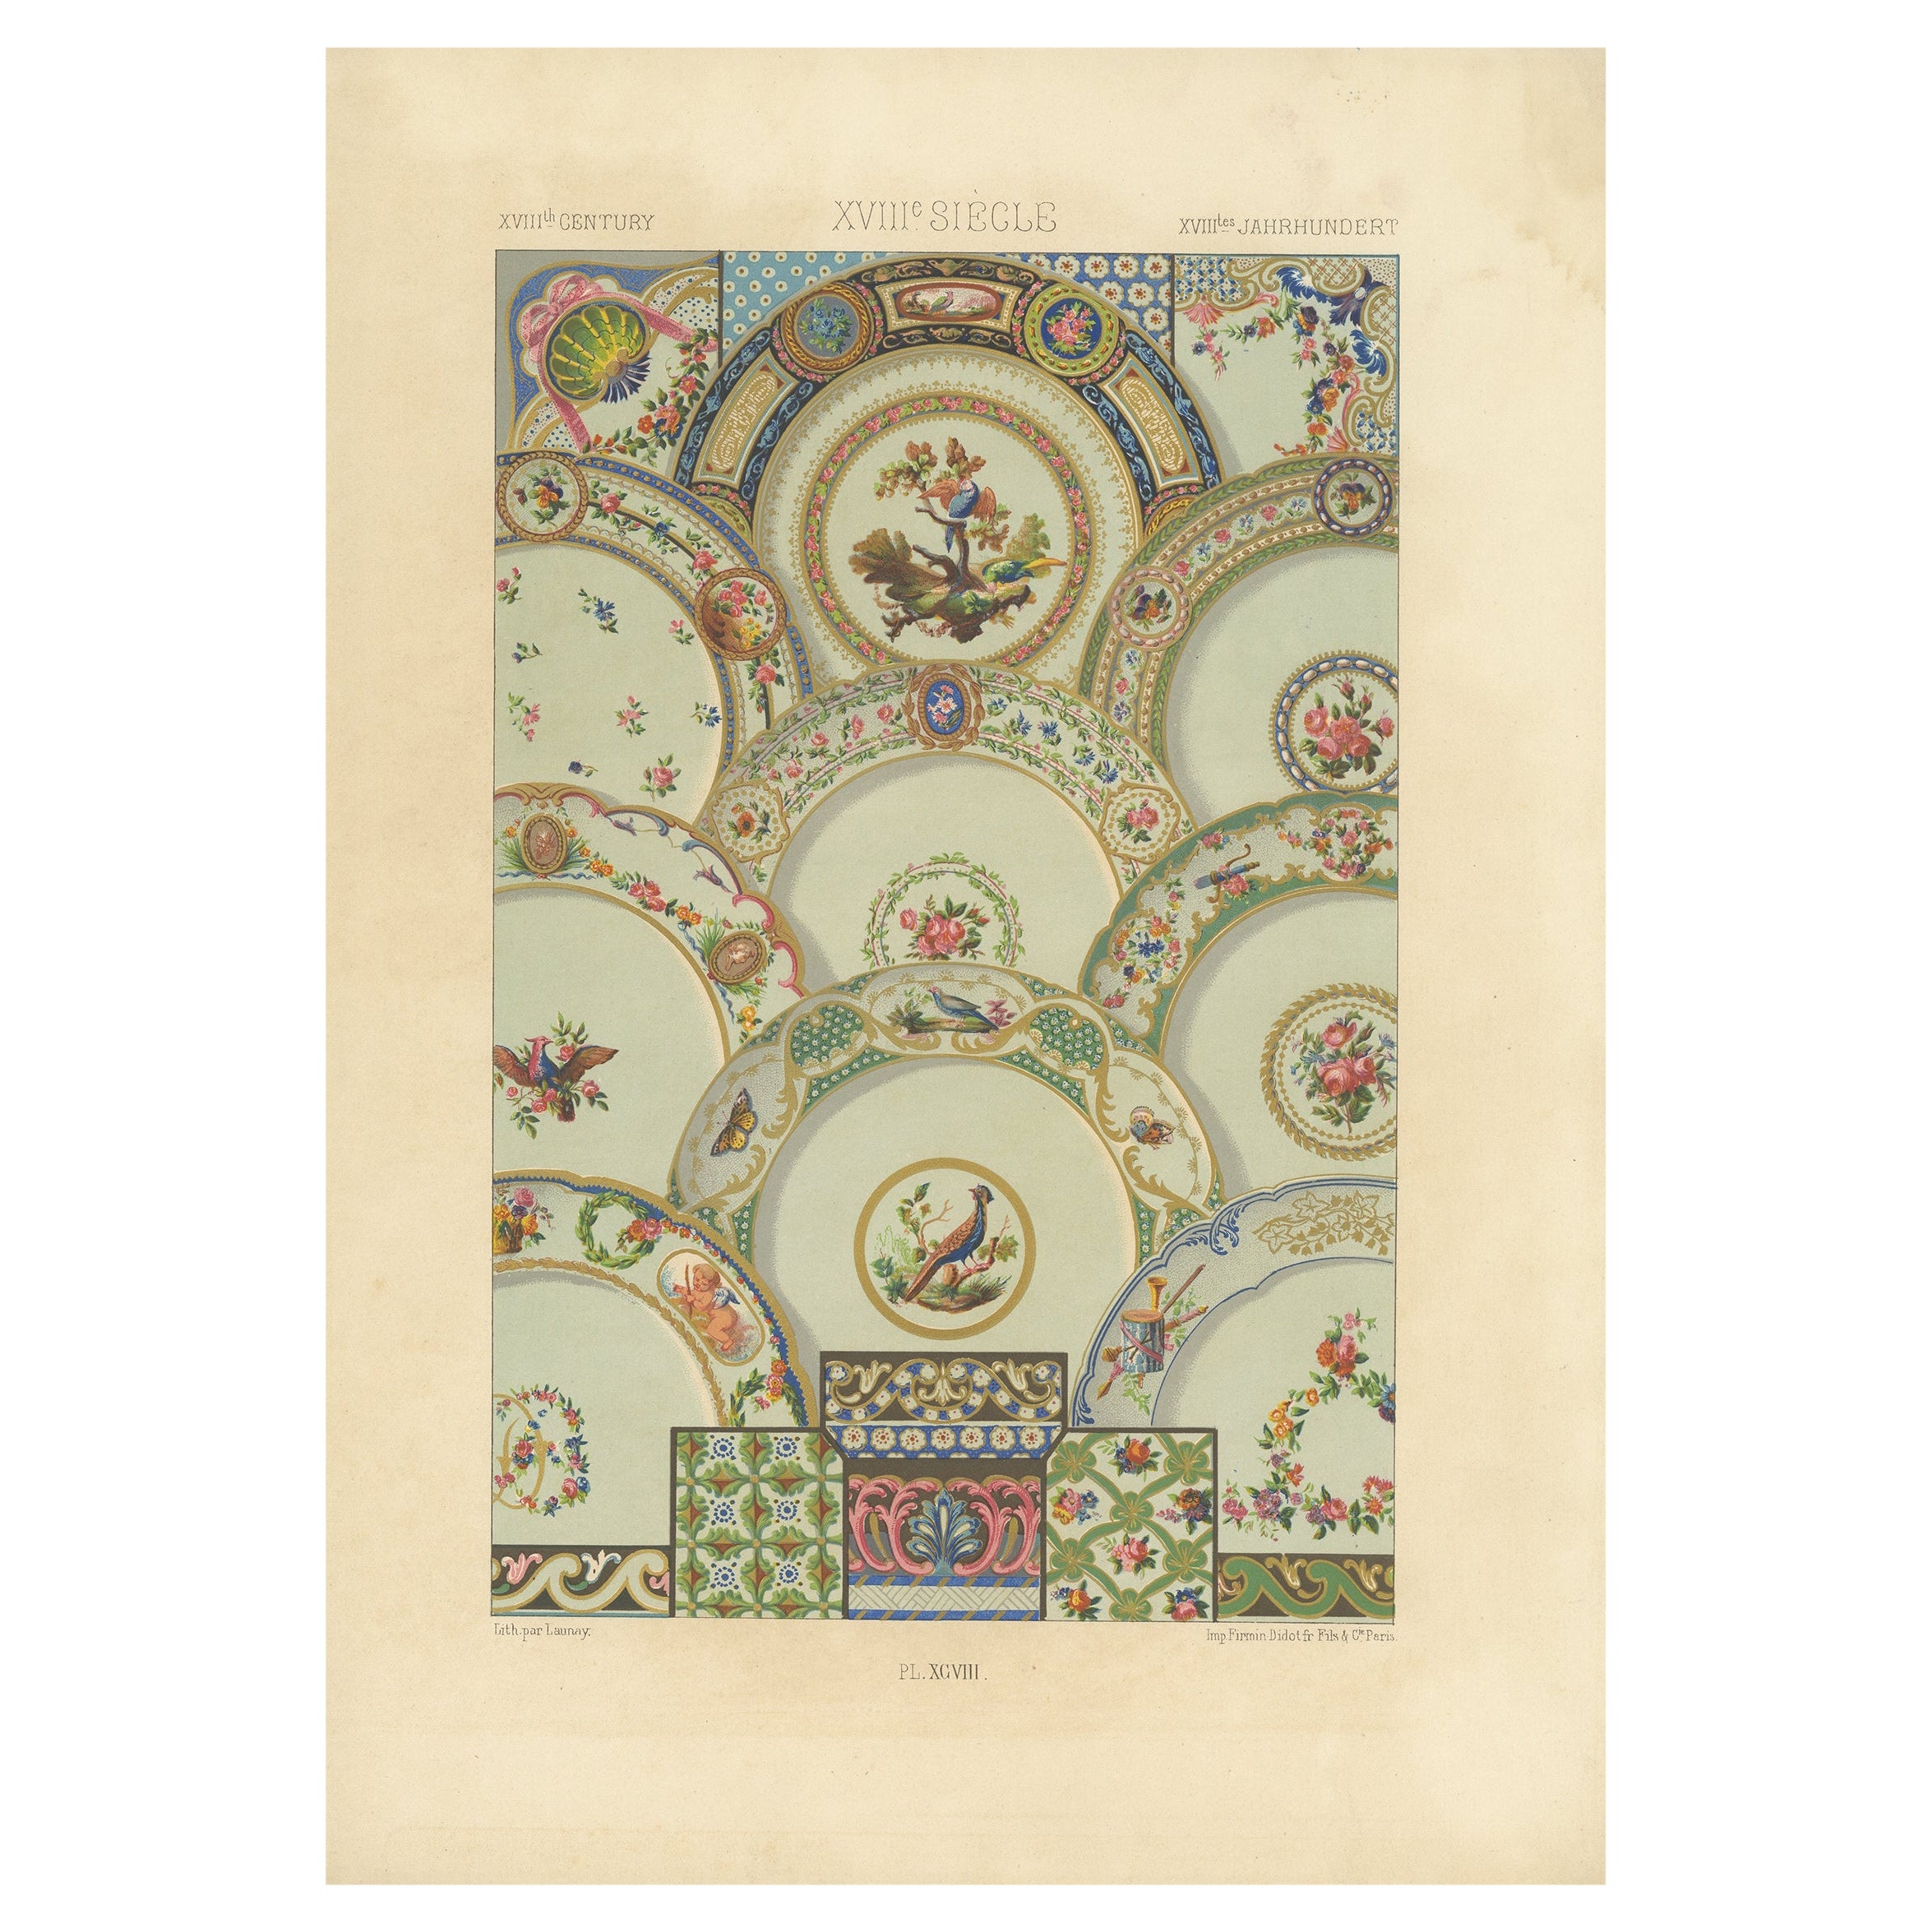 Antique Print of Decorative Art in the 18th Century, 1869